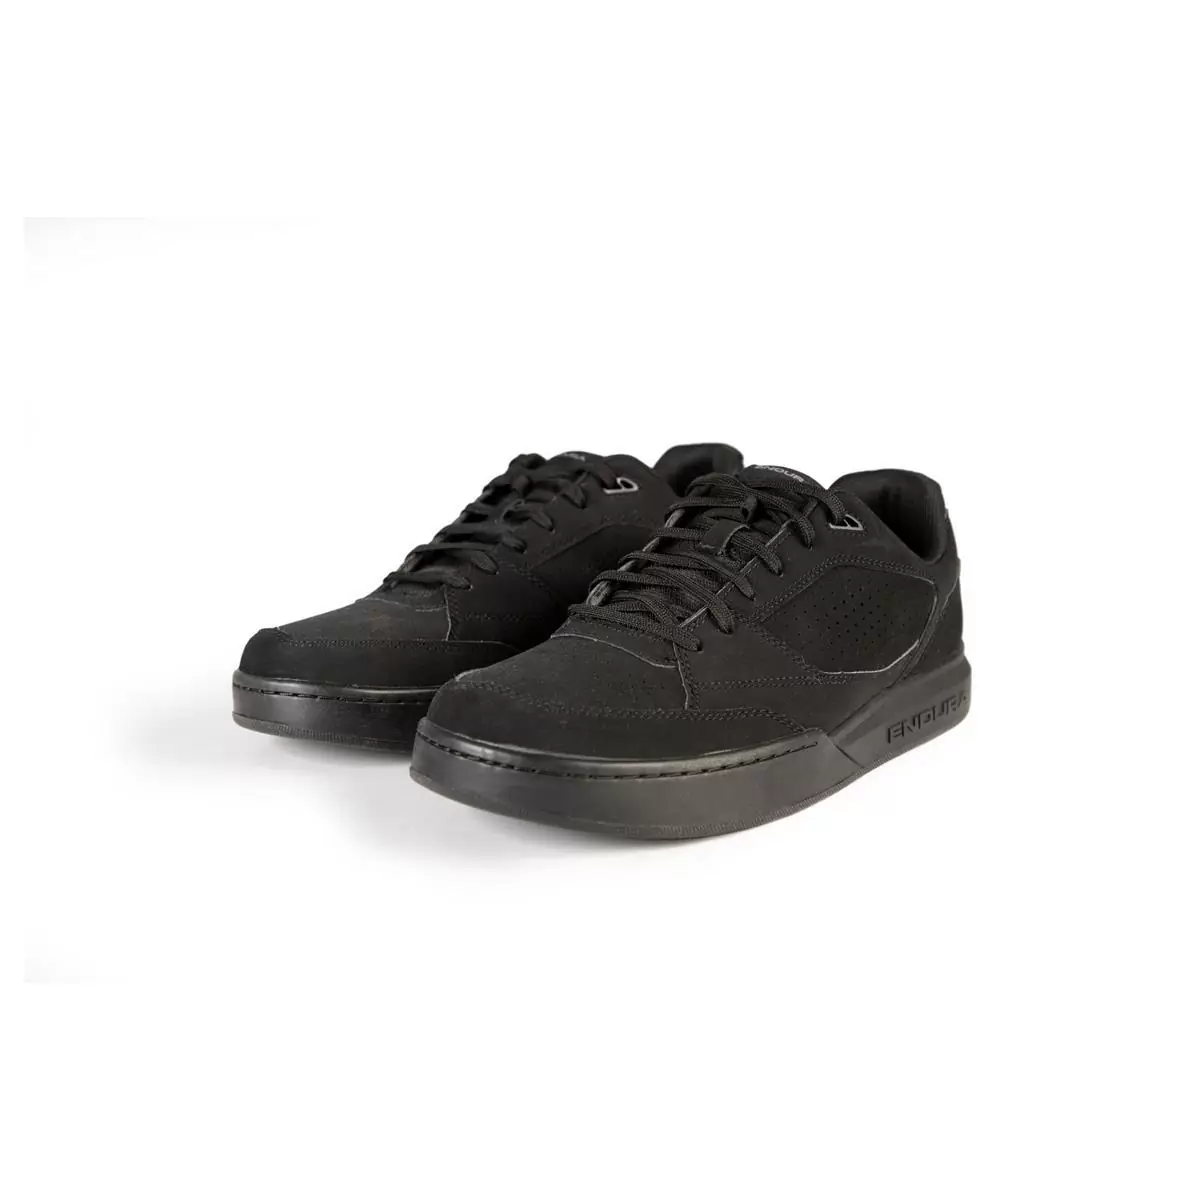 Hummvee Flat Pedal Shoes Black Size 38 - image